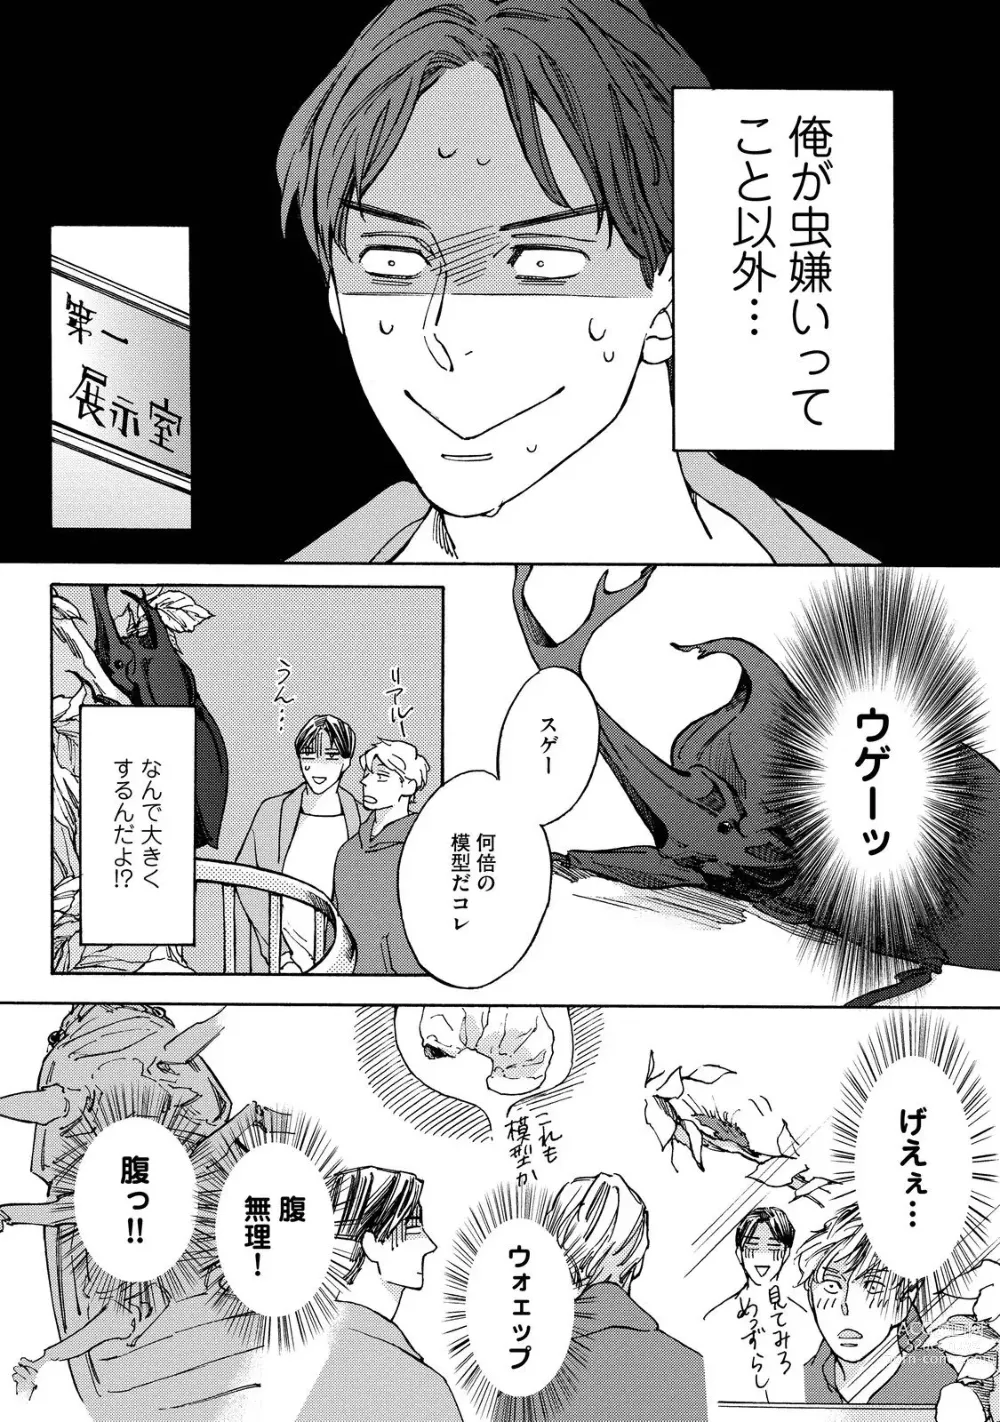 Page 25 of manga Koi Tokidoki, Yaki Saba Teishoku